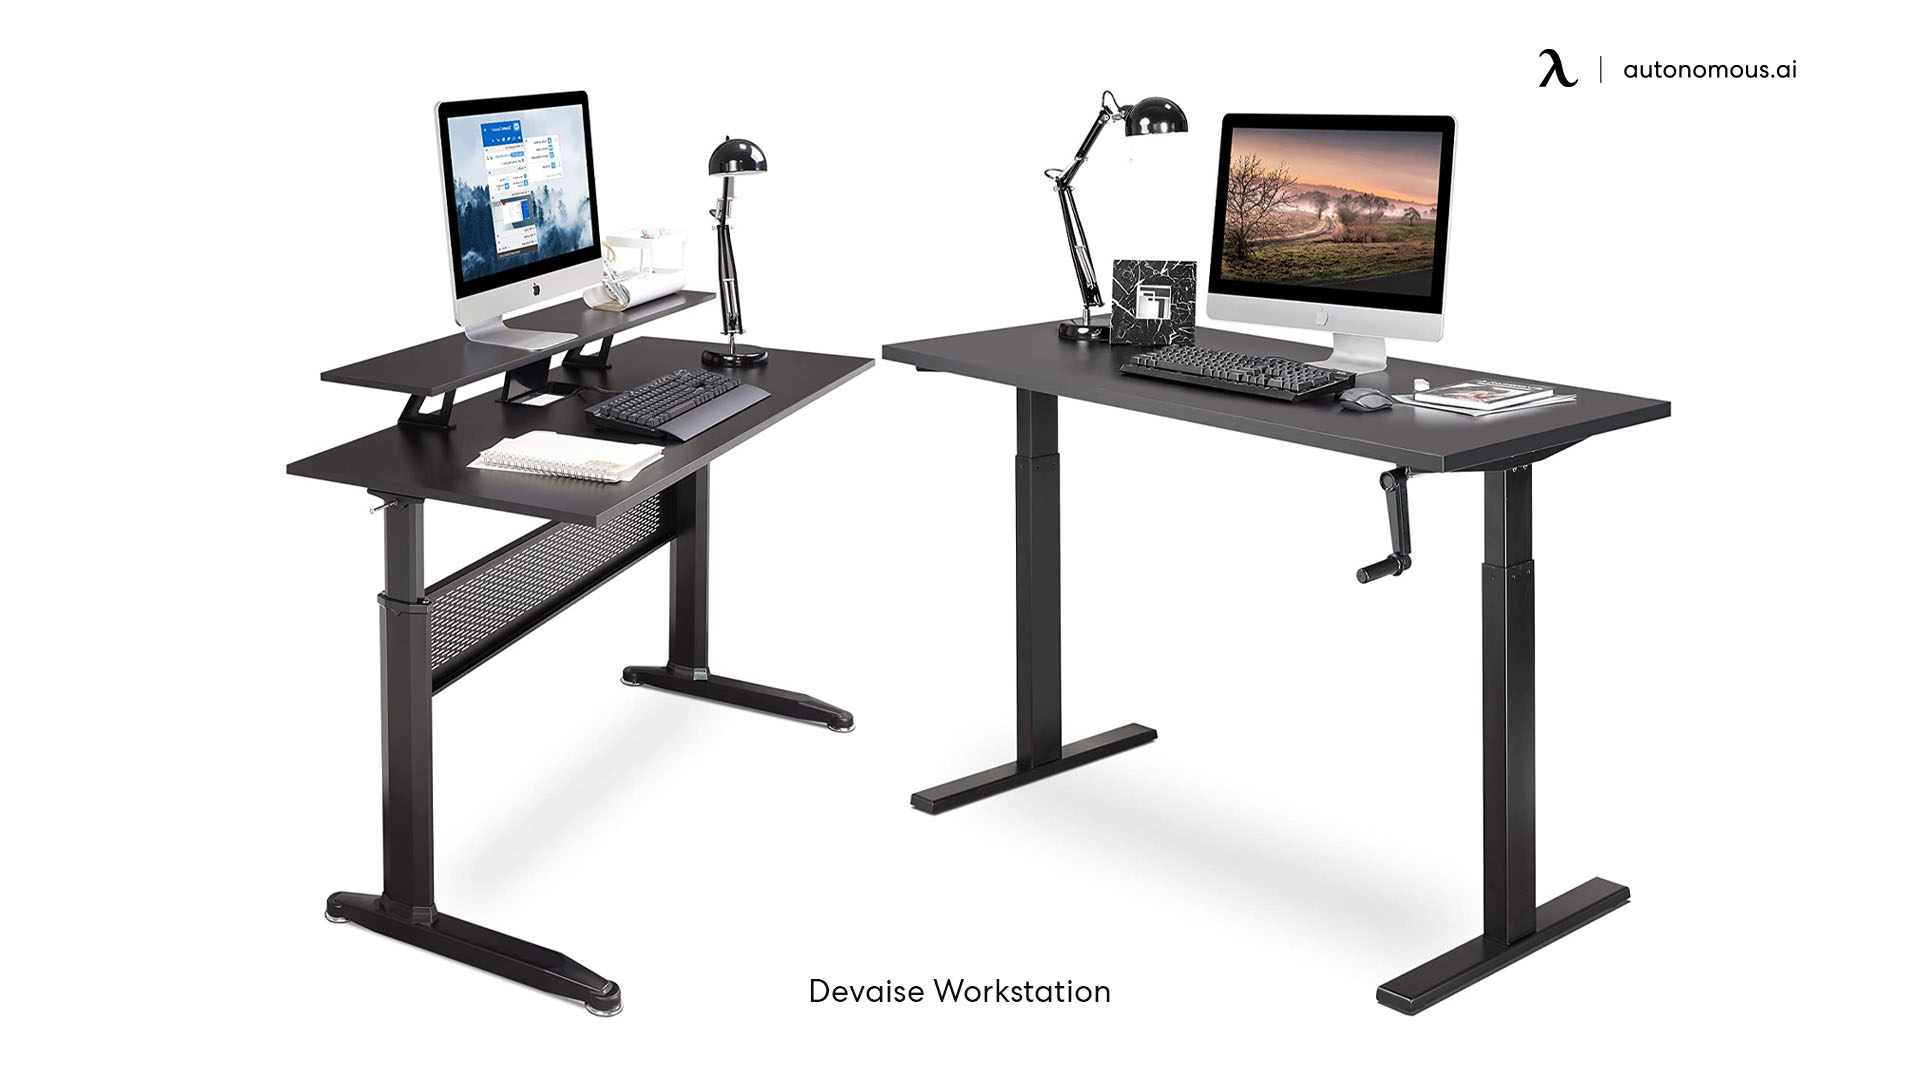 Devaise Workstation desk for employee